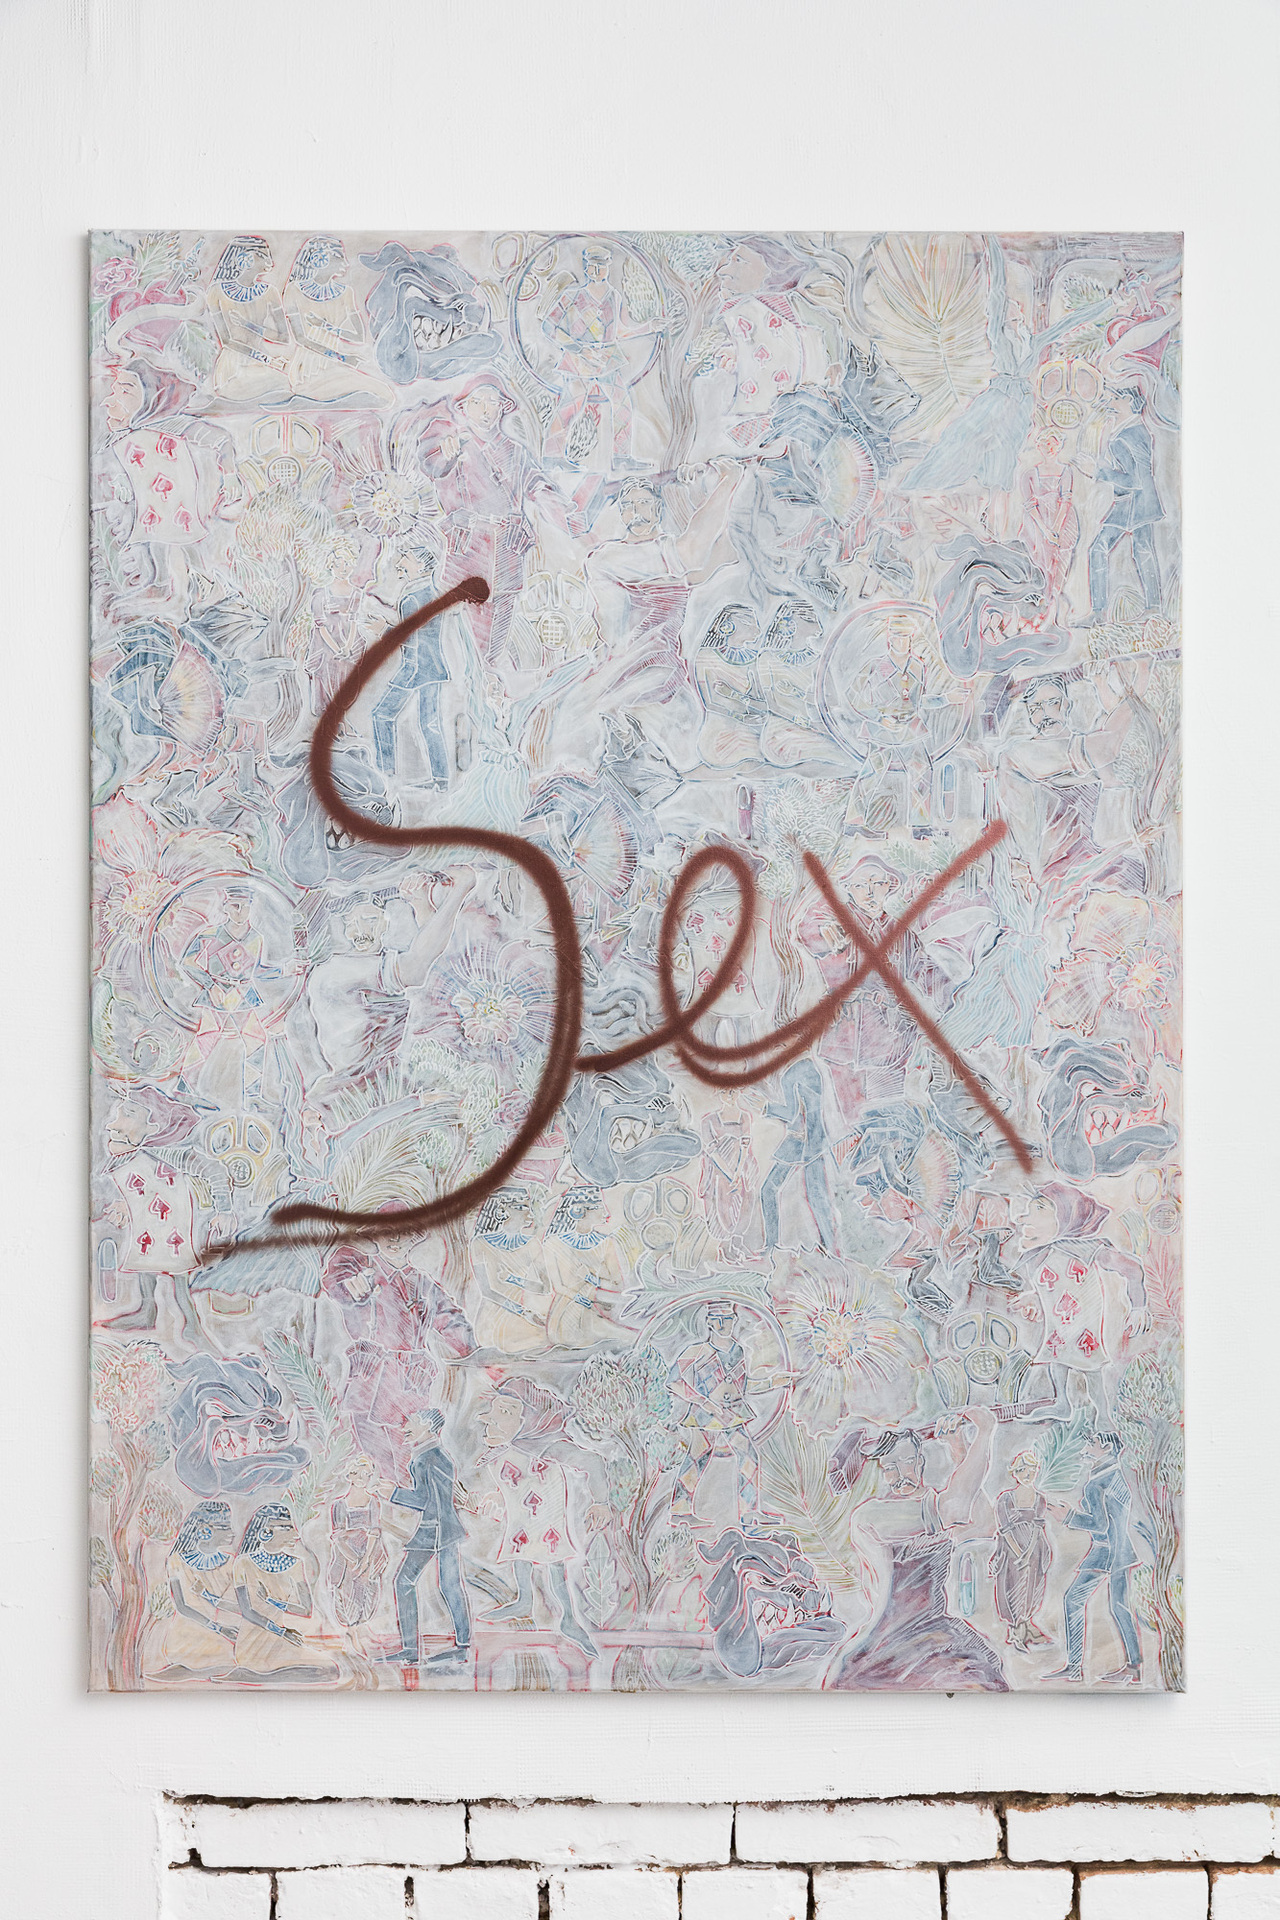 04. Daniel Moldoveanu, Sex, 2020, Acrylic, correction pen, white marker and spray on canvas, 160 x 120 cm